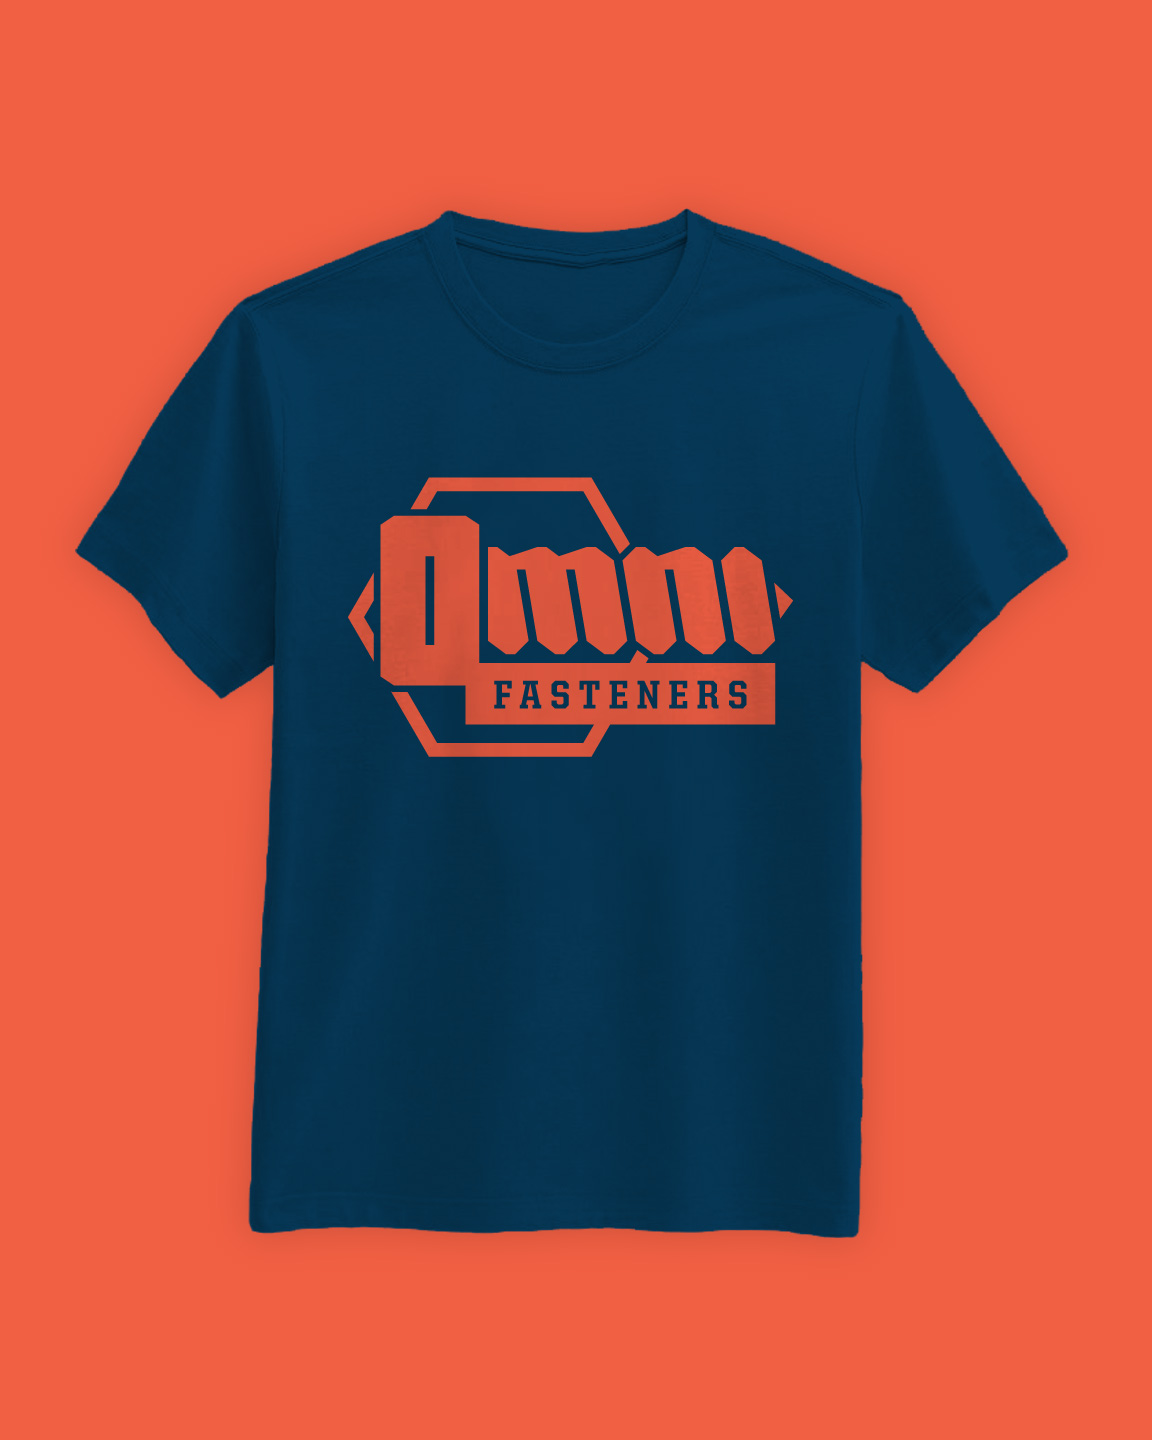 Omni Fasteners t-shirt mockup